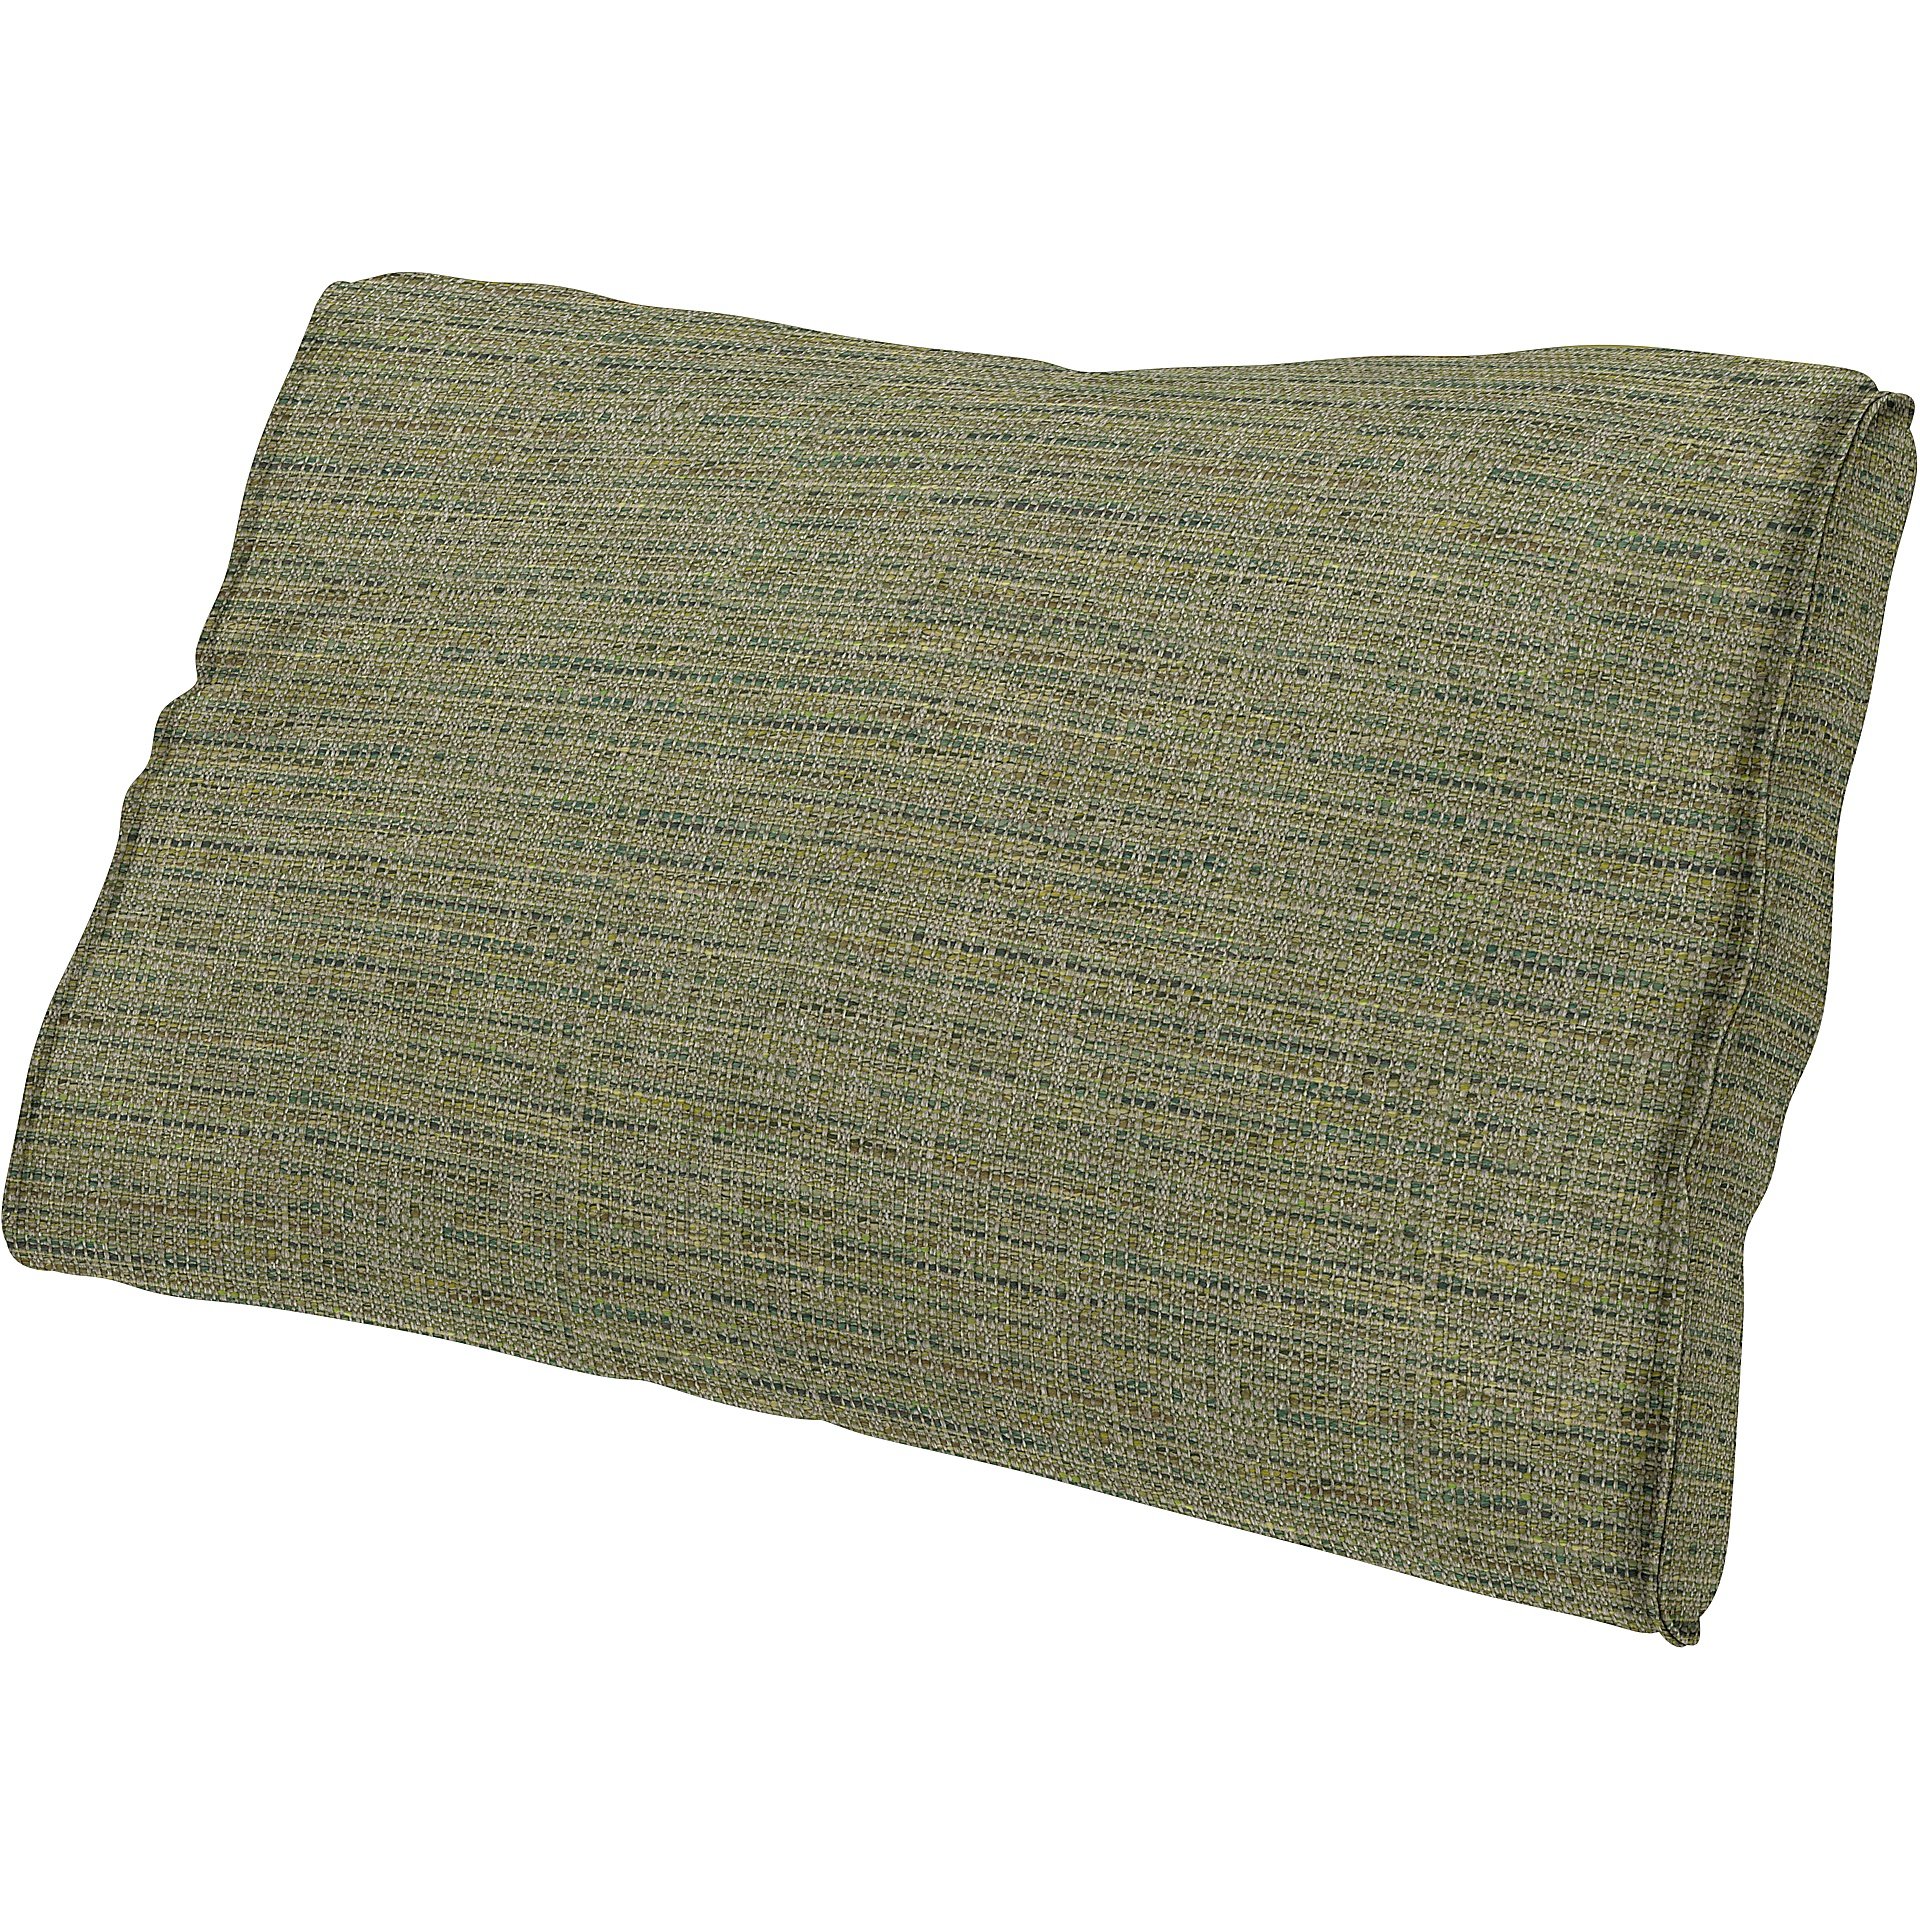 IKEA - Lumbar cushion cover Farlov Loose fit, Meadow Green, Boucle & Texture - Bemz